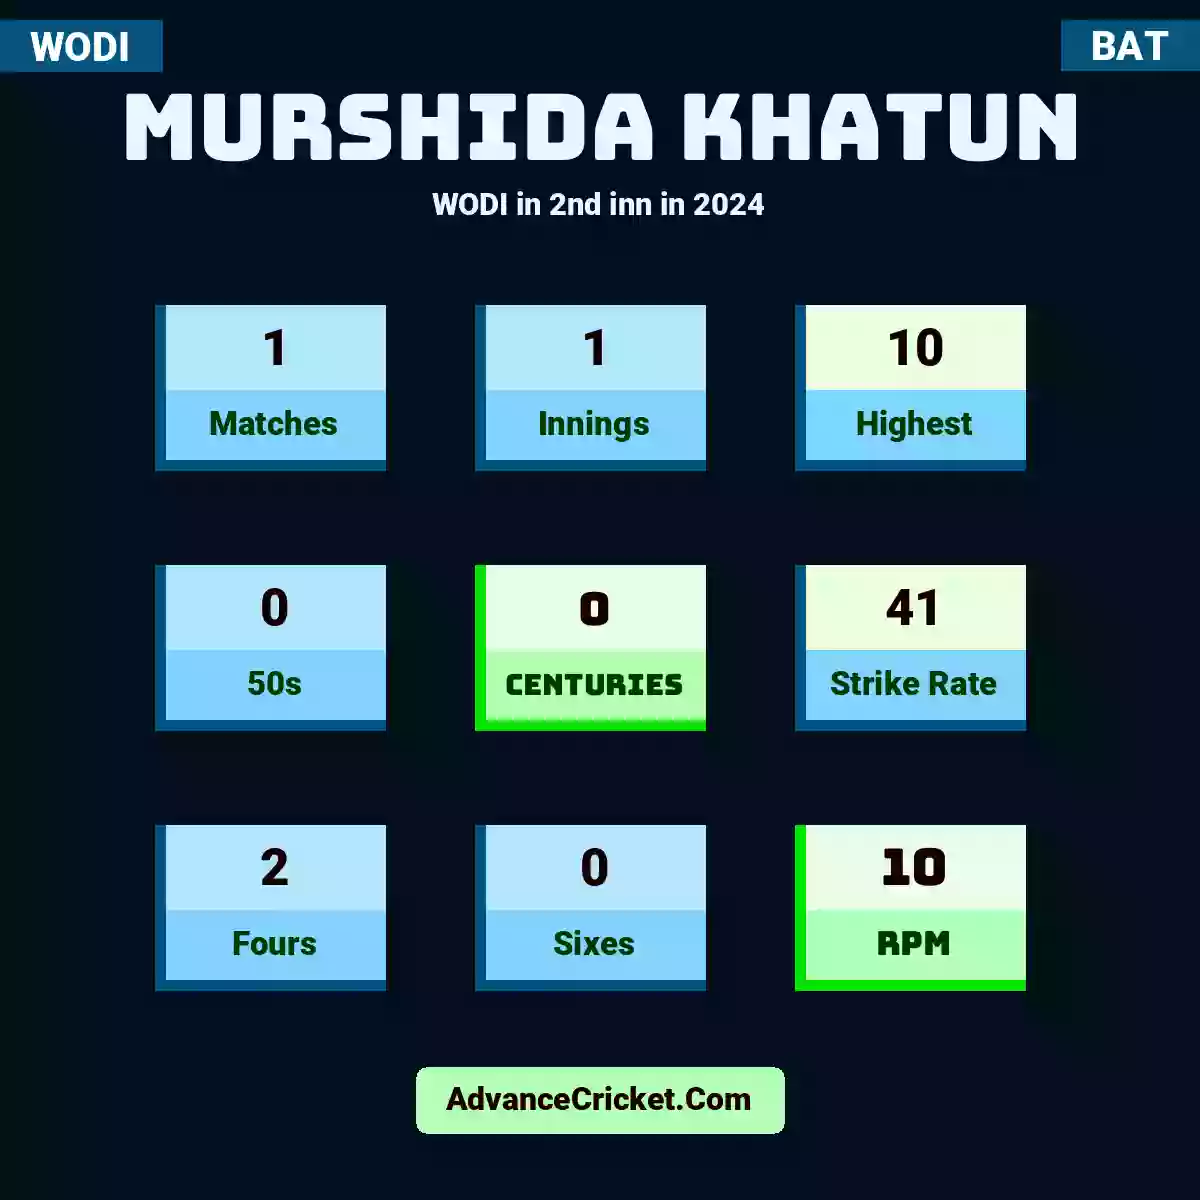 Murshida Khatun WODI  in 2nd inn in 2024, Murshida Khatun played 1 matches, scored 10 runs as highest, 0 half-centuries, and 0 centuries, with a strike rate of 41. M.Khatun hit 2 fours and 0 sixes, with an RPM of 10.